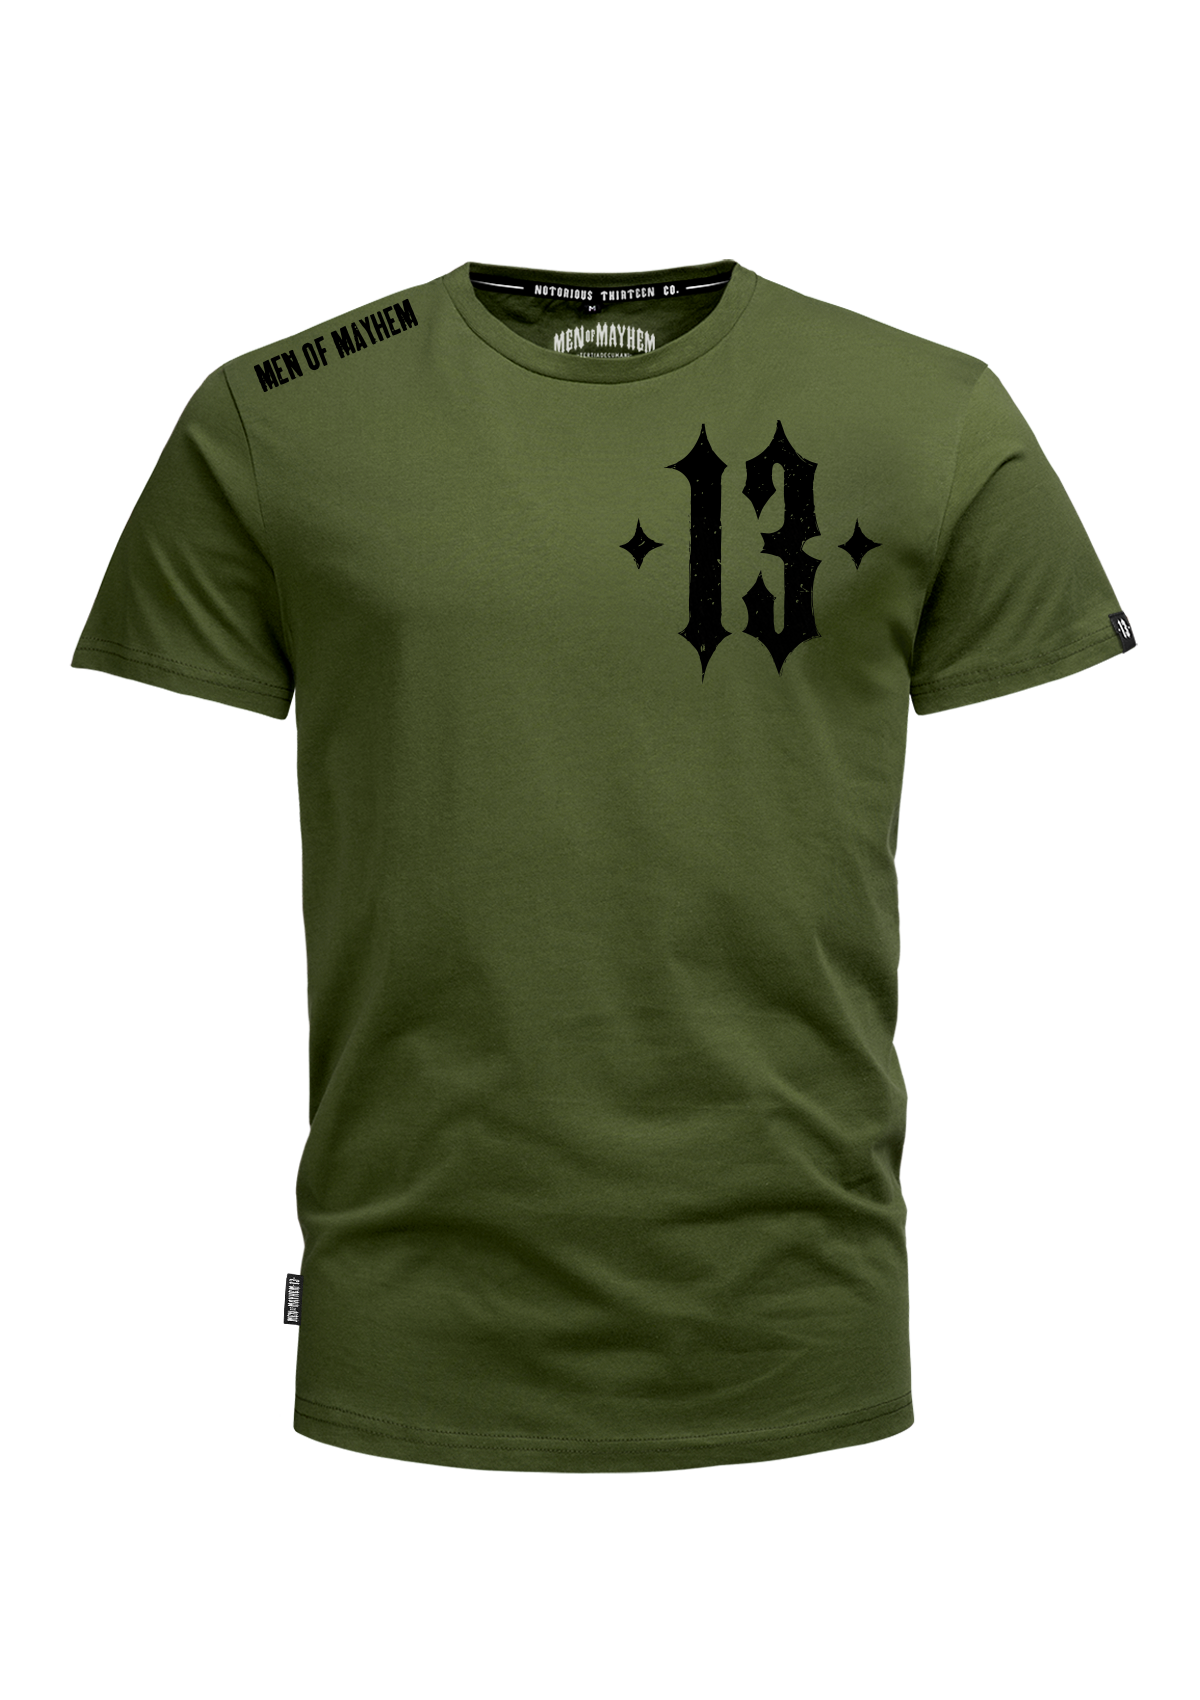 T-Shirt Army Skull O/S